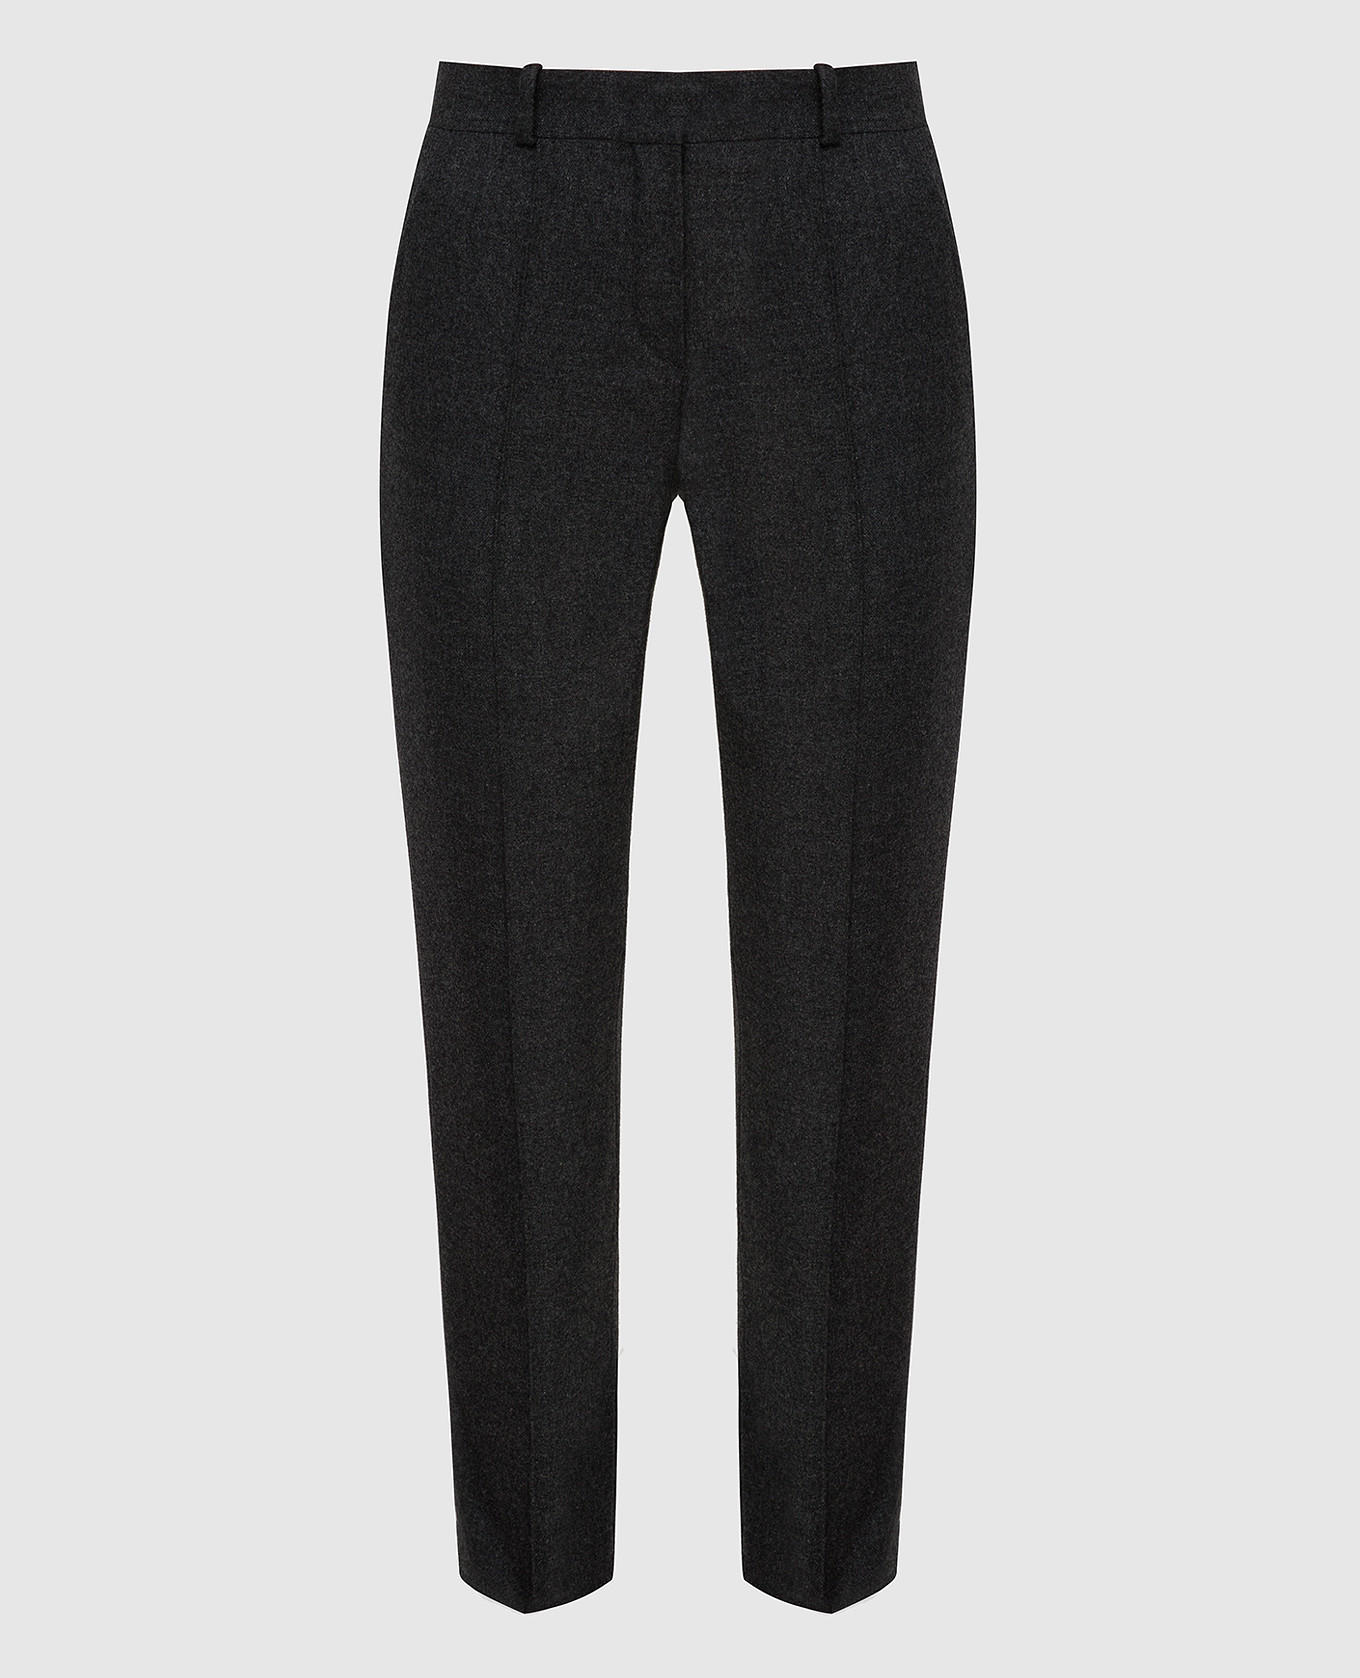 Dark gray cashmere trousers